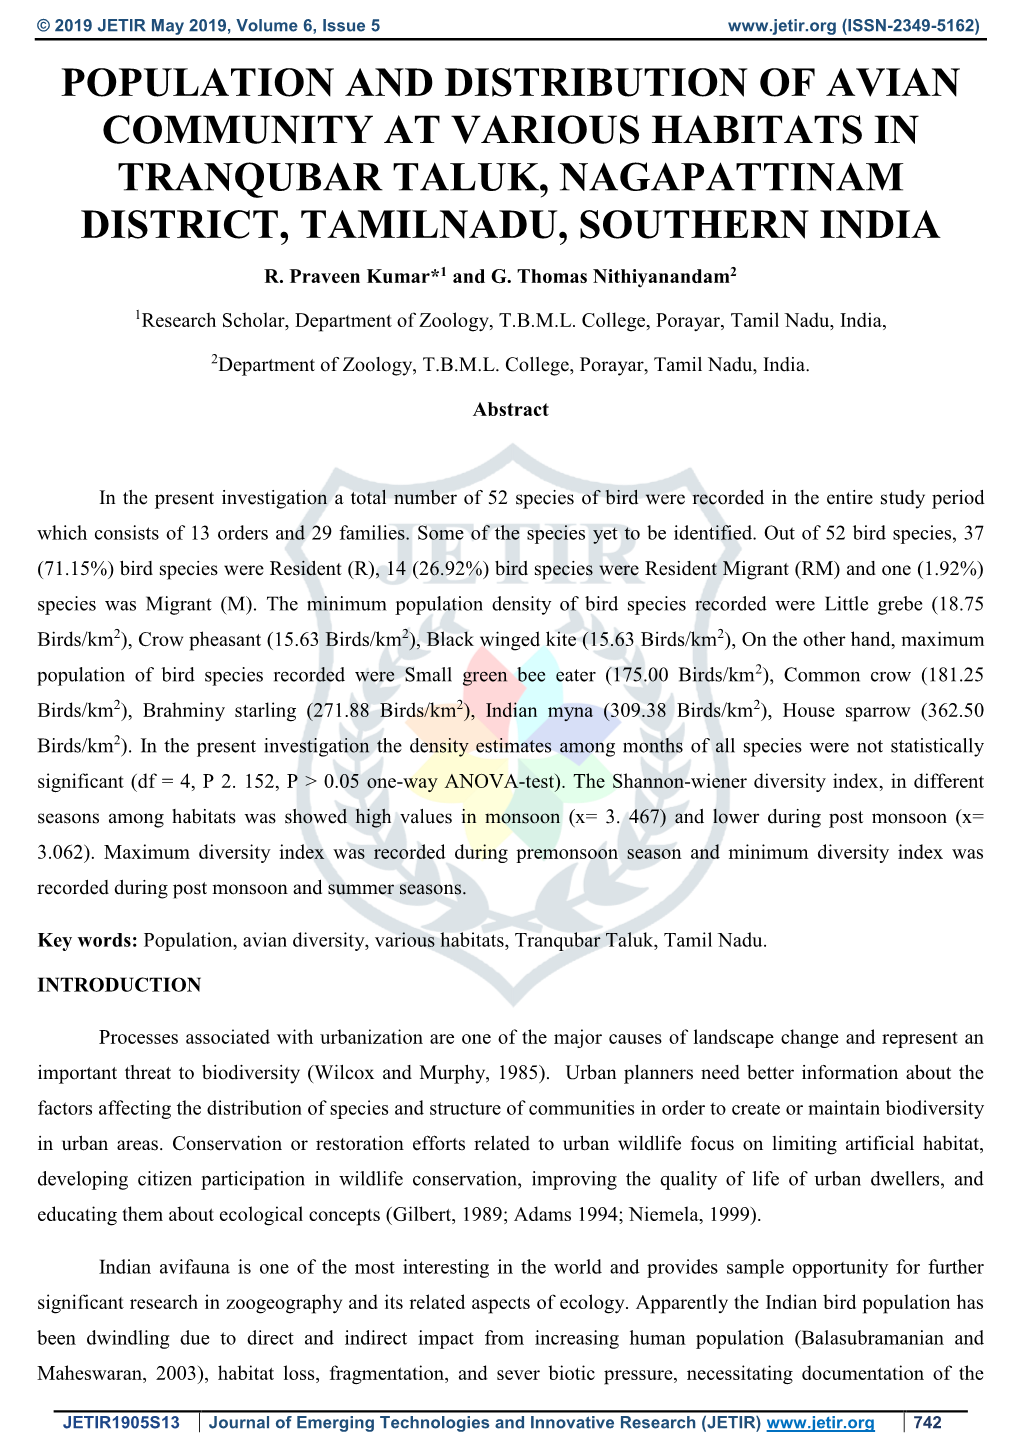 Population and Distribution of Avian Community at Various Habitats in Tranqubar Taluk, Nagapattinam District, Tamilnadu, Southern India R